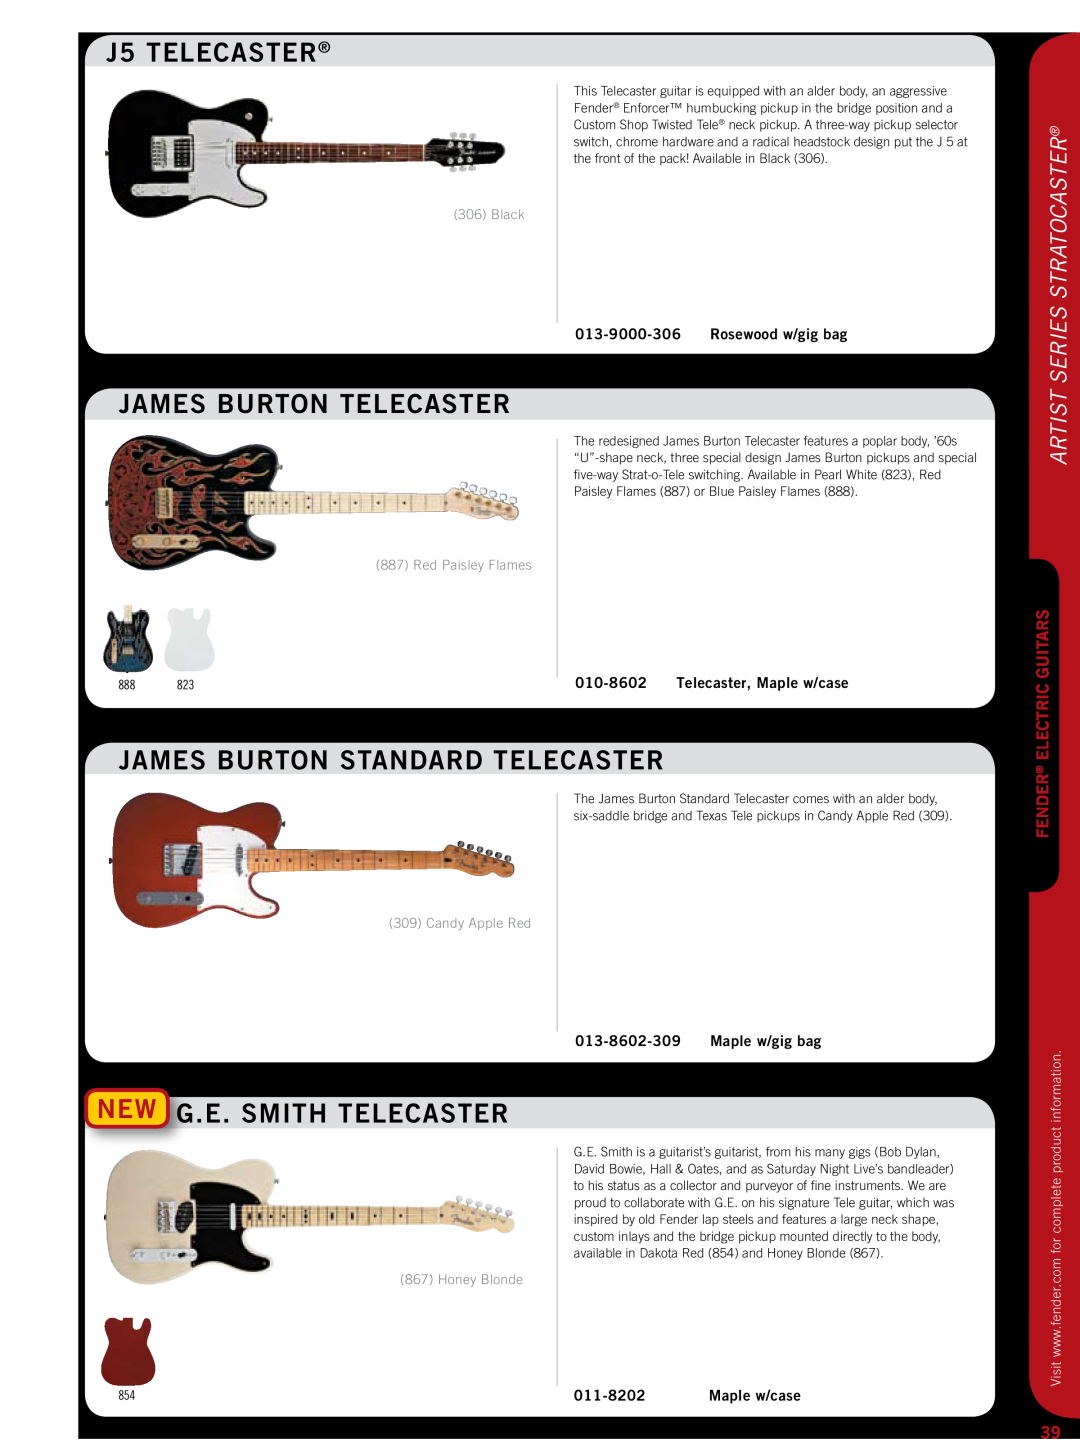 Fender 011-9600 J5 TELECASTER, James Burton Telecaster, James Burton Standard Telecaster, new G.E. SMITH TELECASTER, Black 